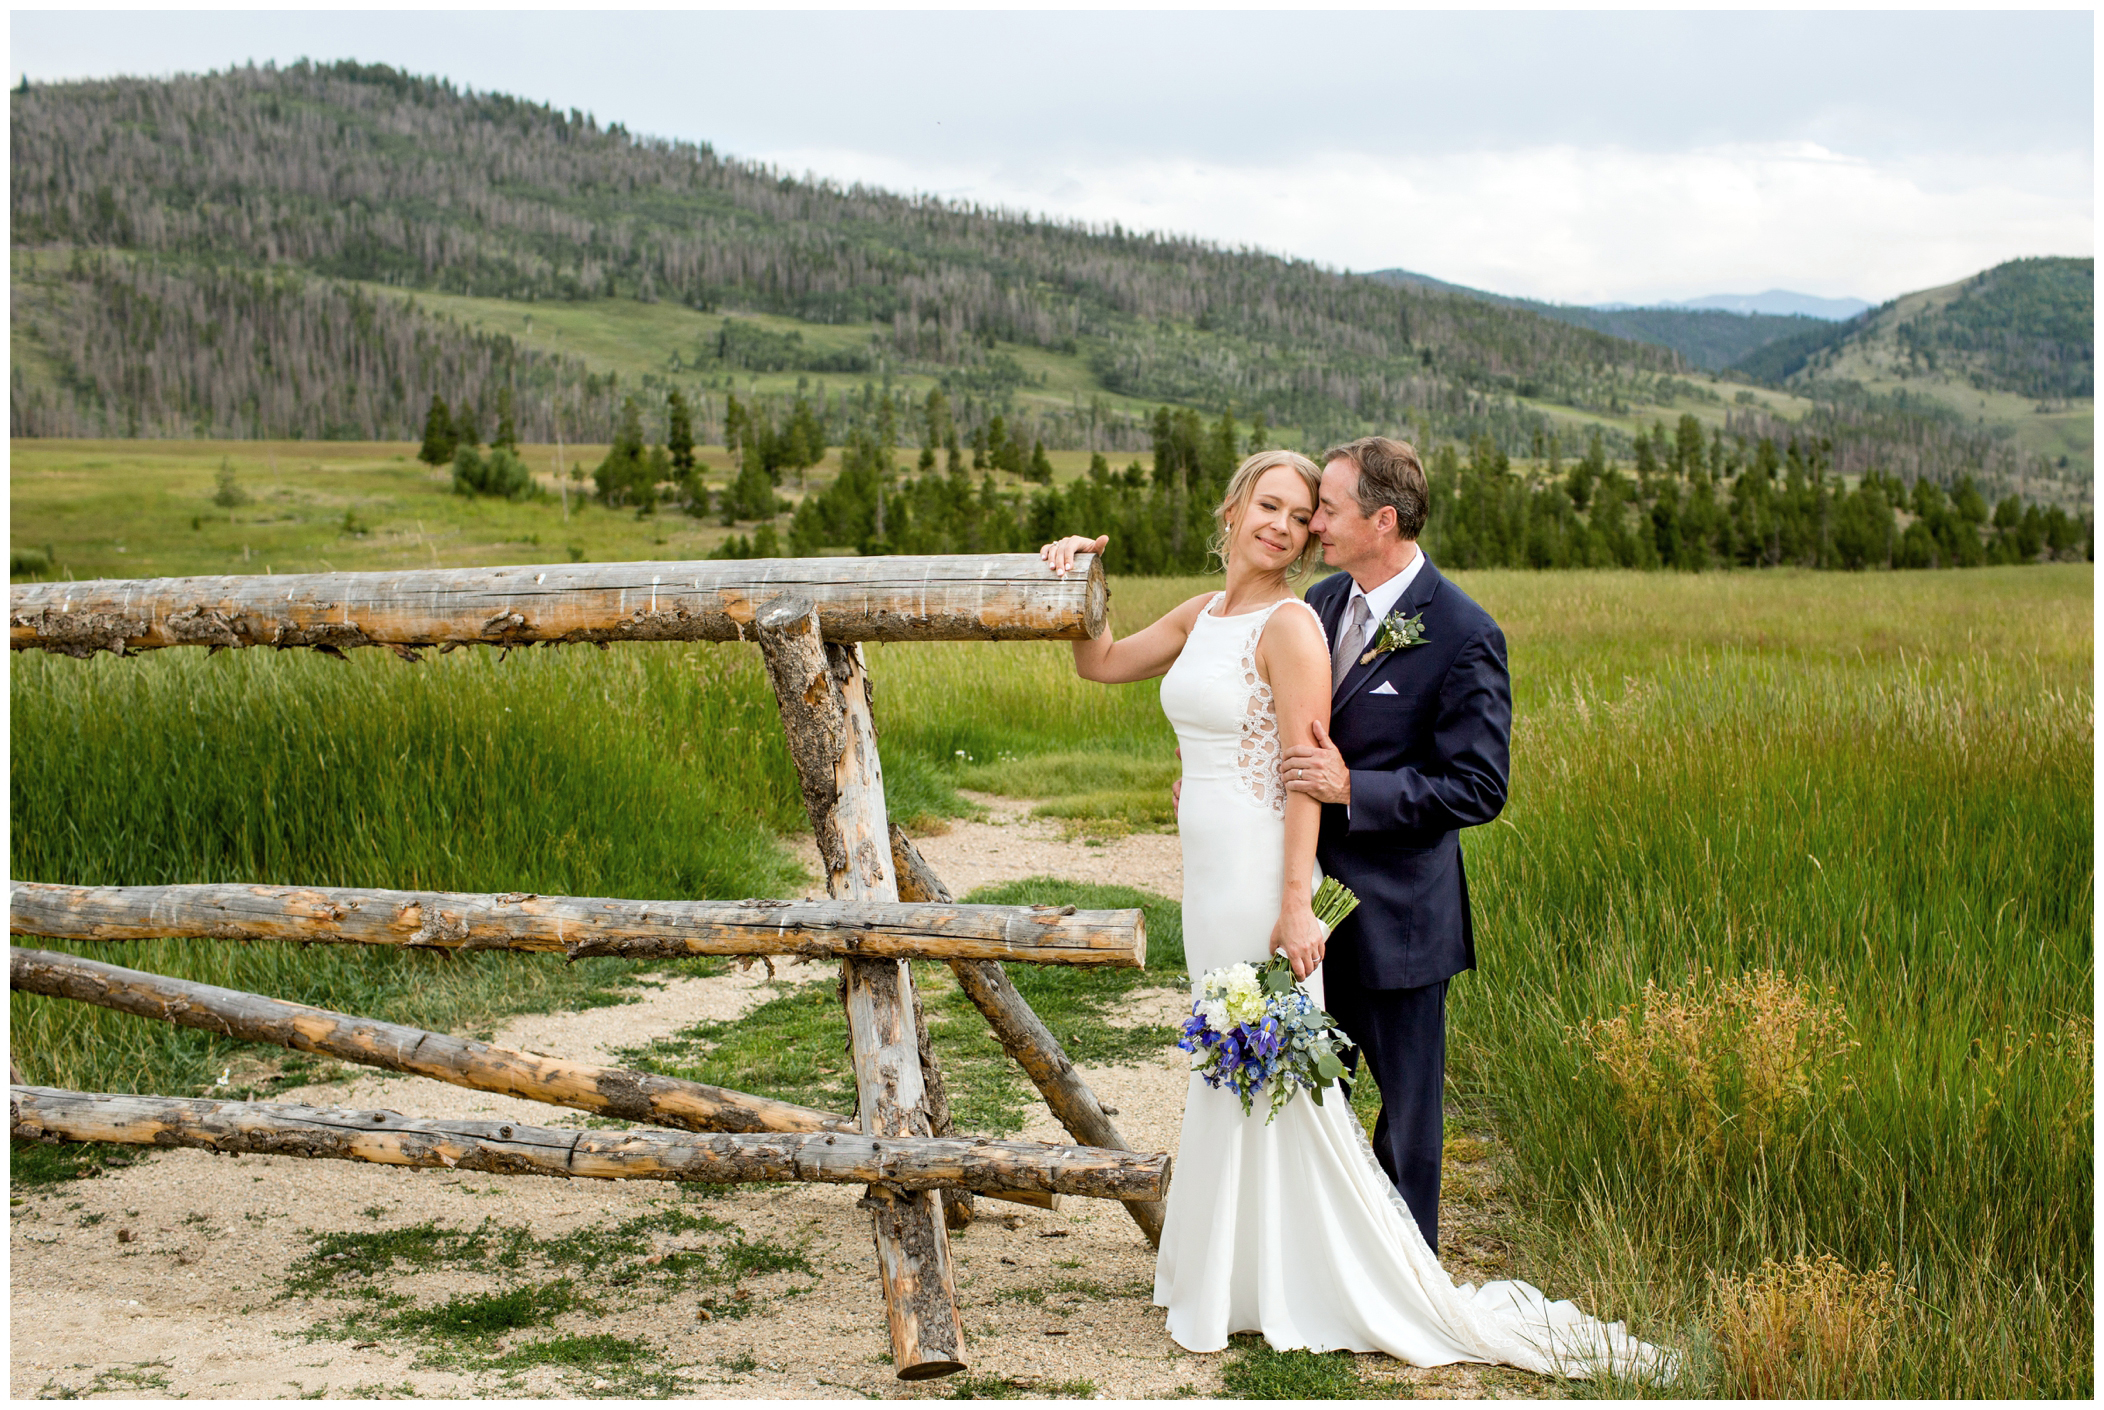 Winter Park Colorado wedding photography 